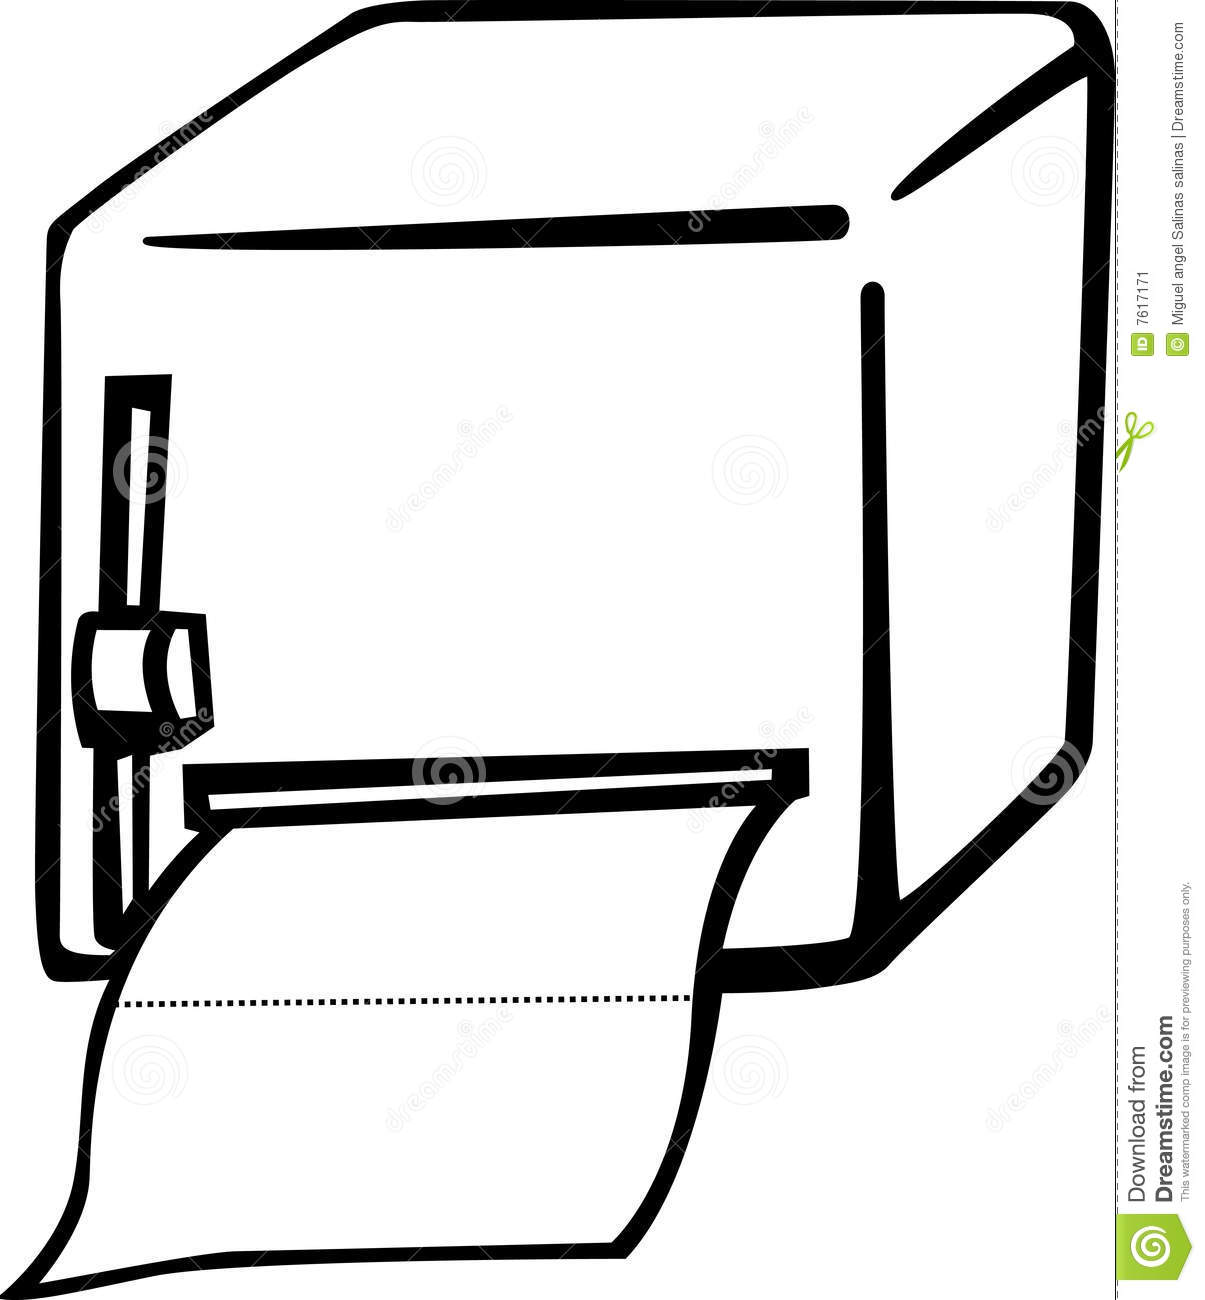 Paper Towel Dispenser Clip Art Images   Pictures   Becuo